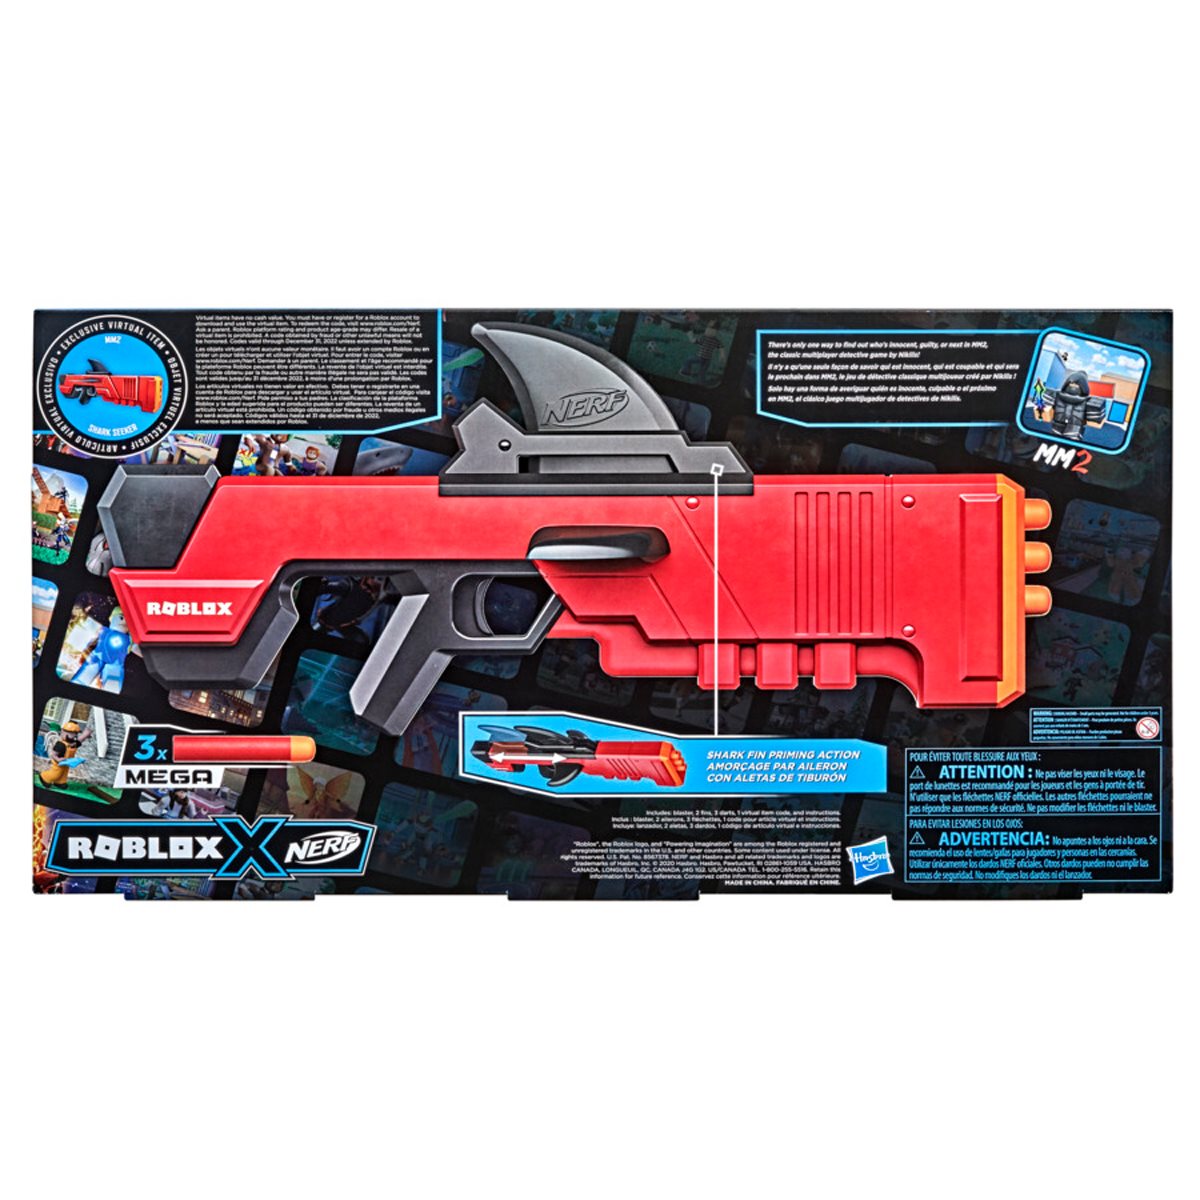 Nerf Roblox MM2 Shark Seeker Blaster, 1 ct - Kroger